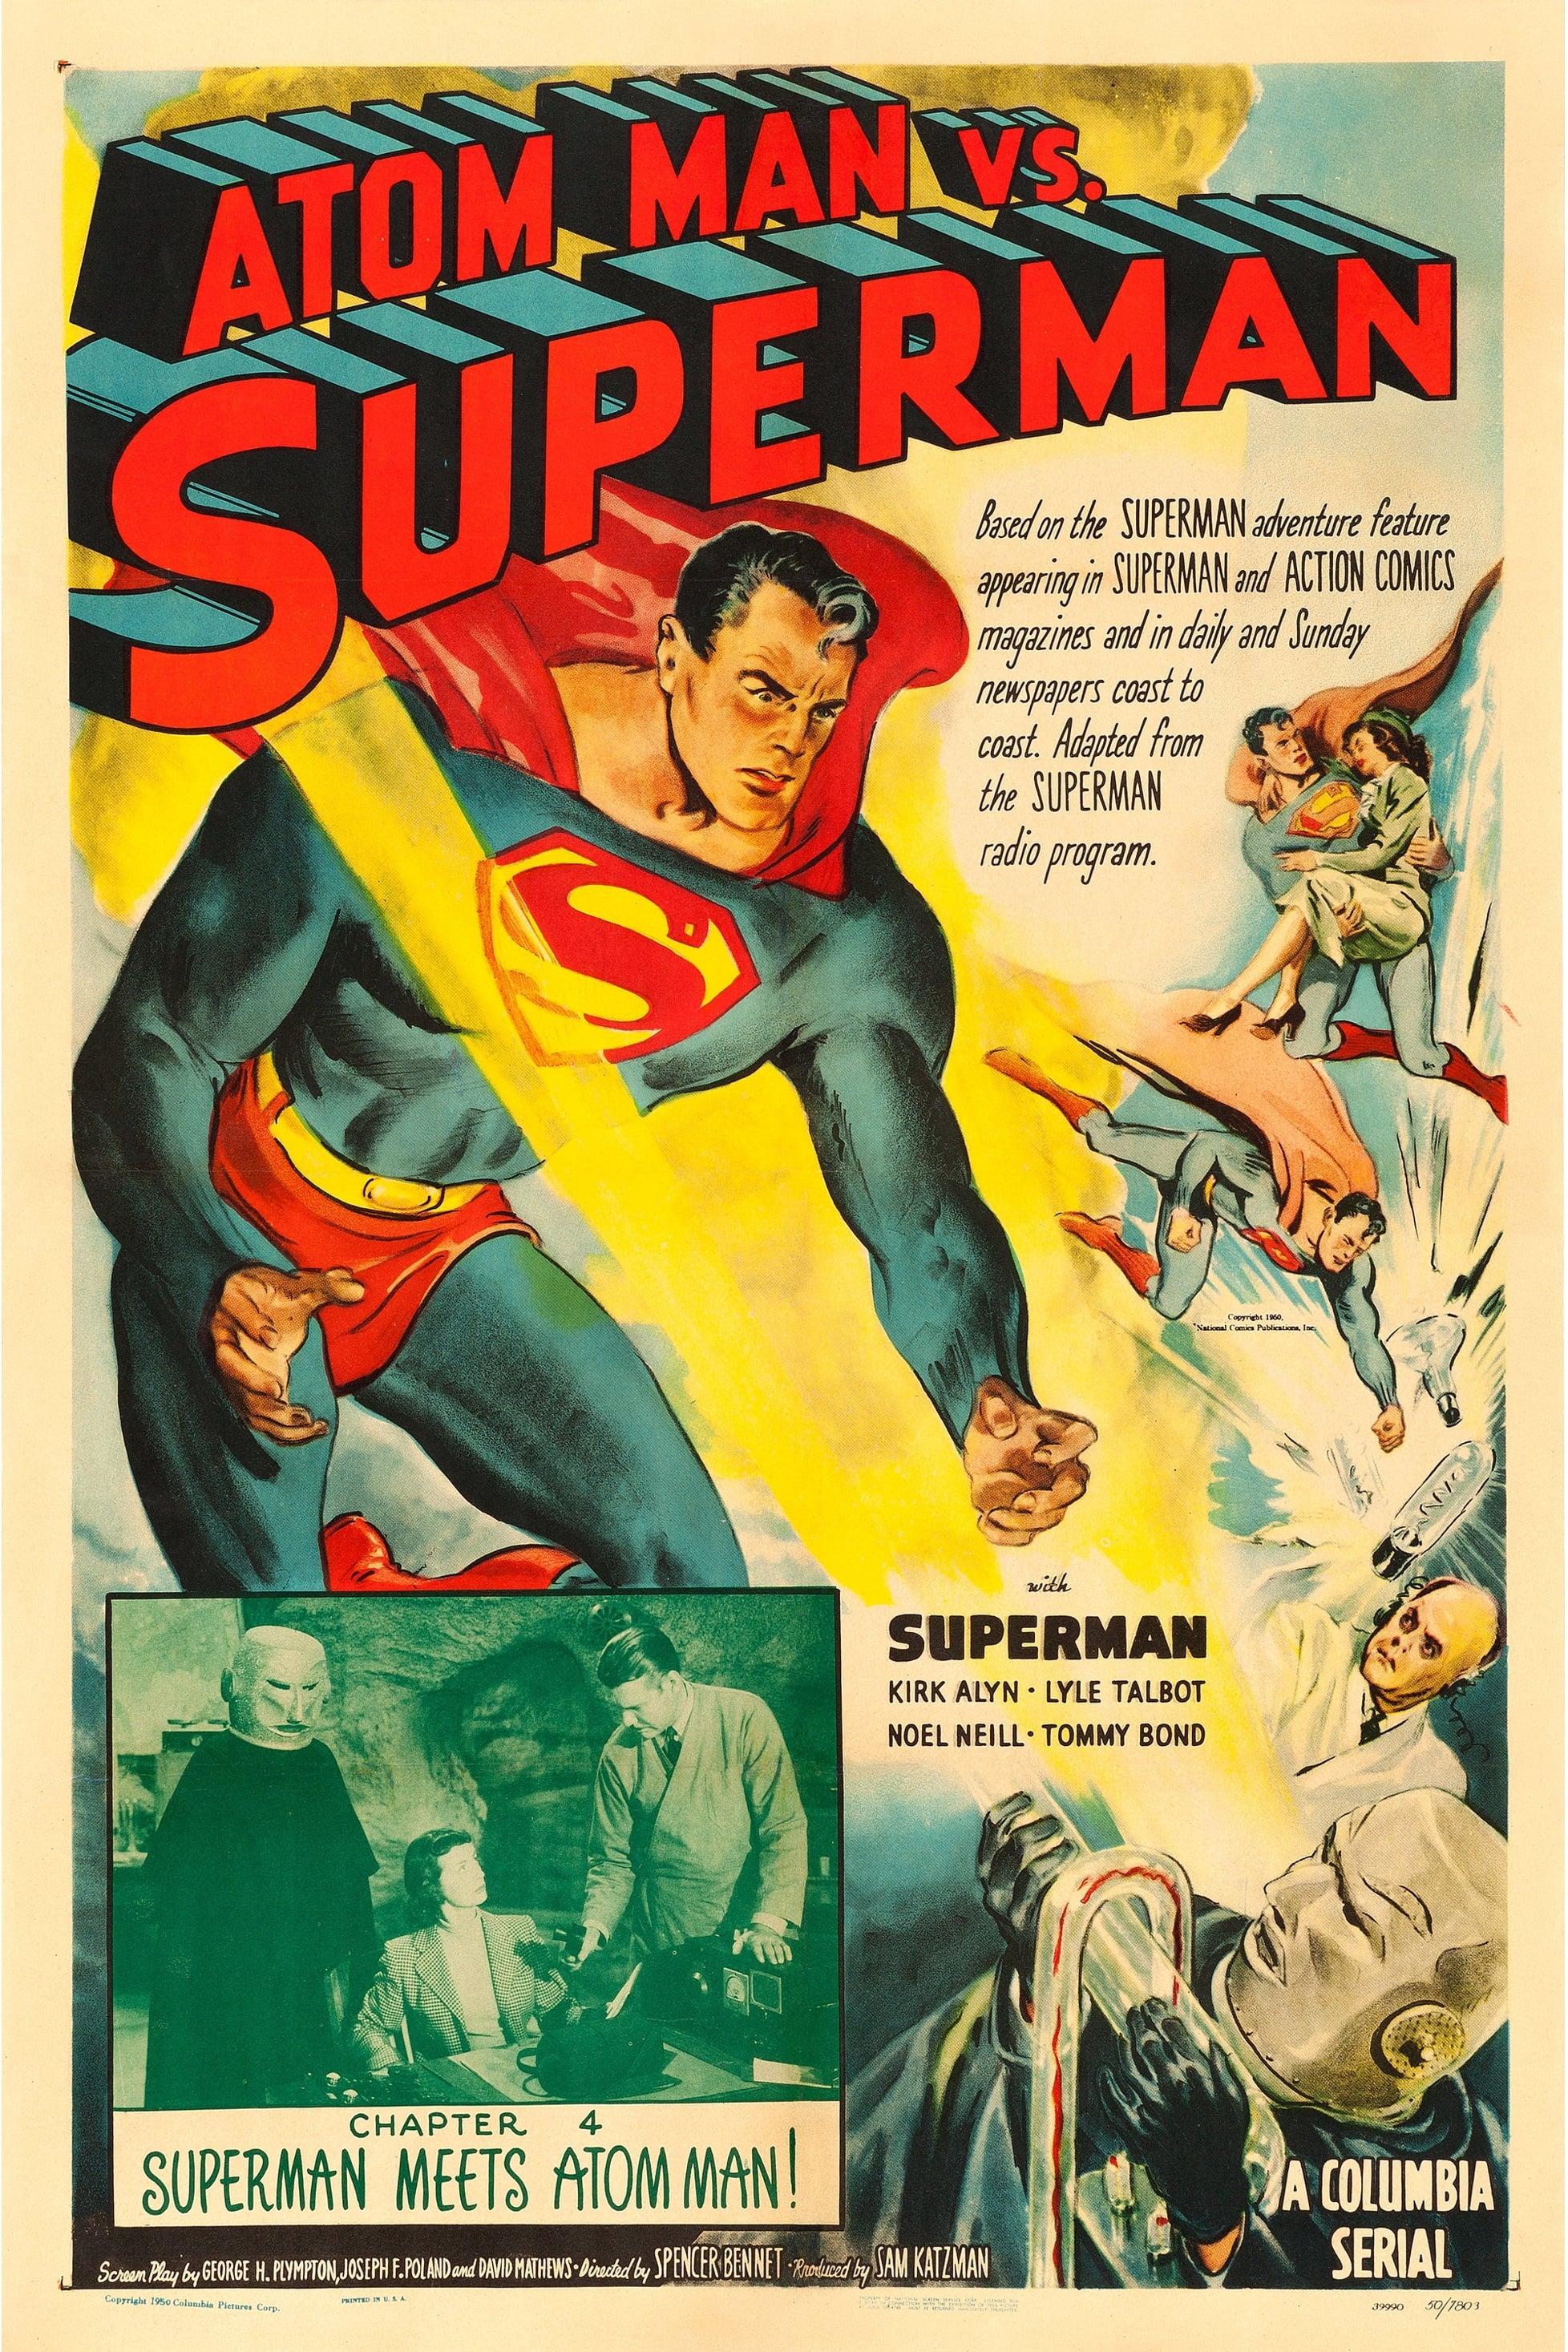 Atom Man vs Superman poster